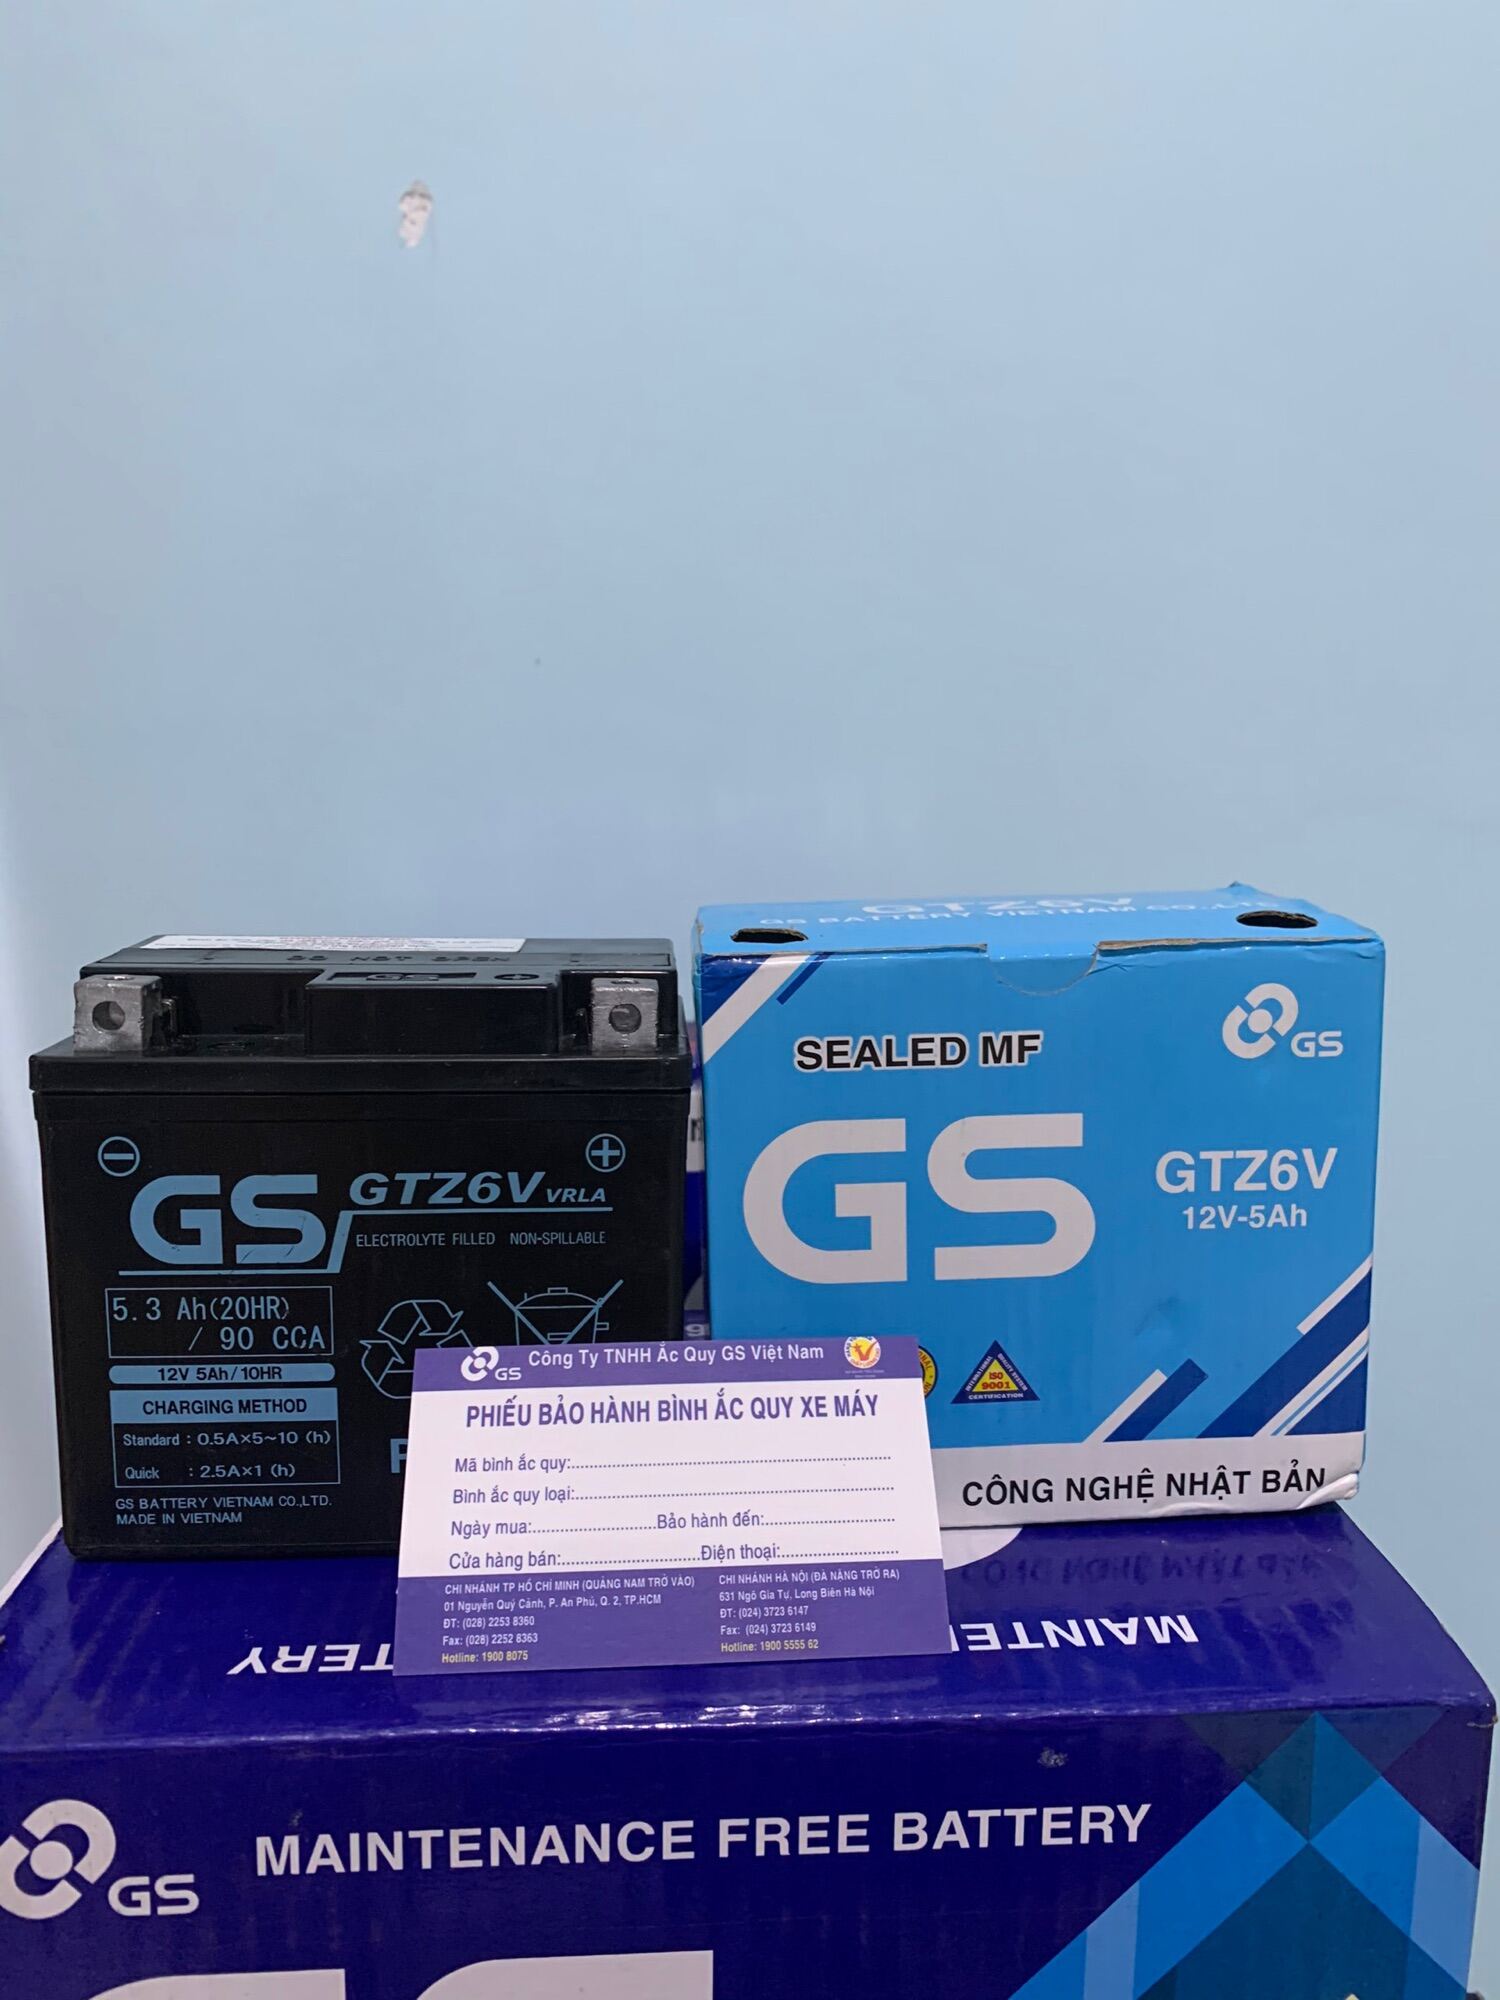 Ắc quy GS GTZ6V(12V-5ah)Xài cho Lead 125,AirBlade,Vision,SH mode,...